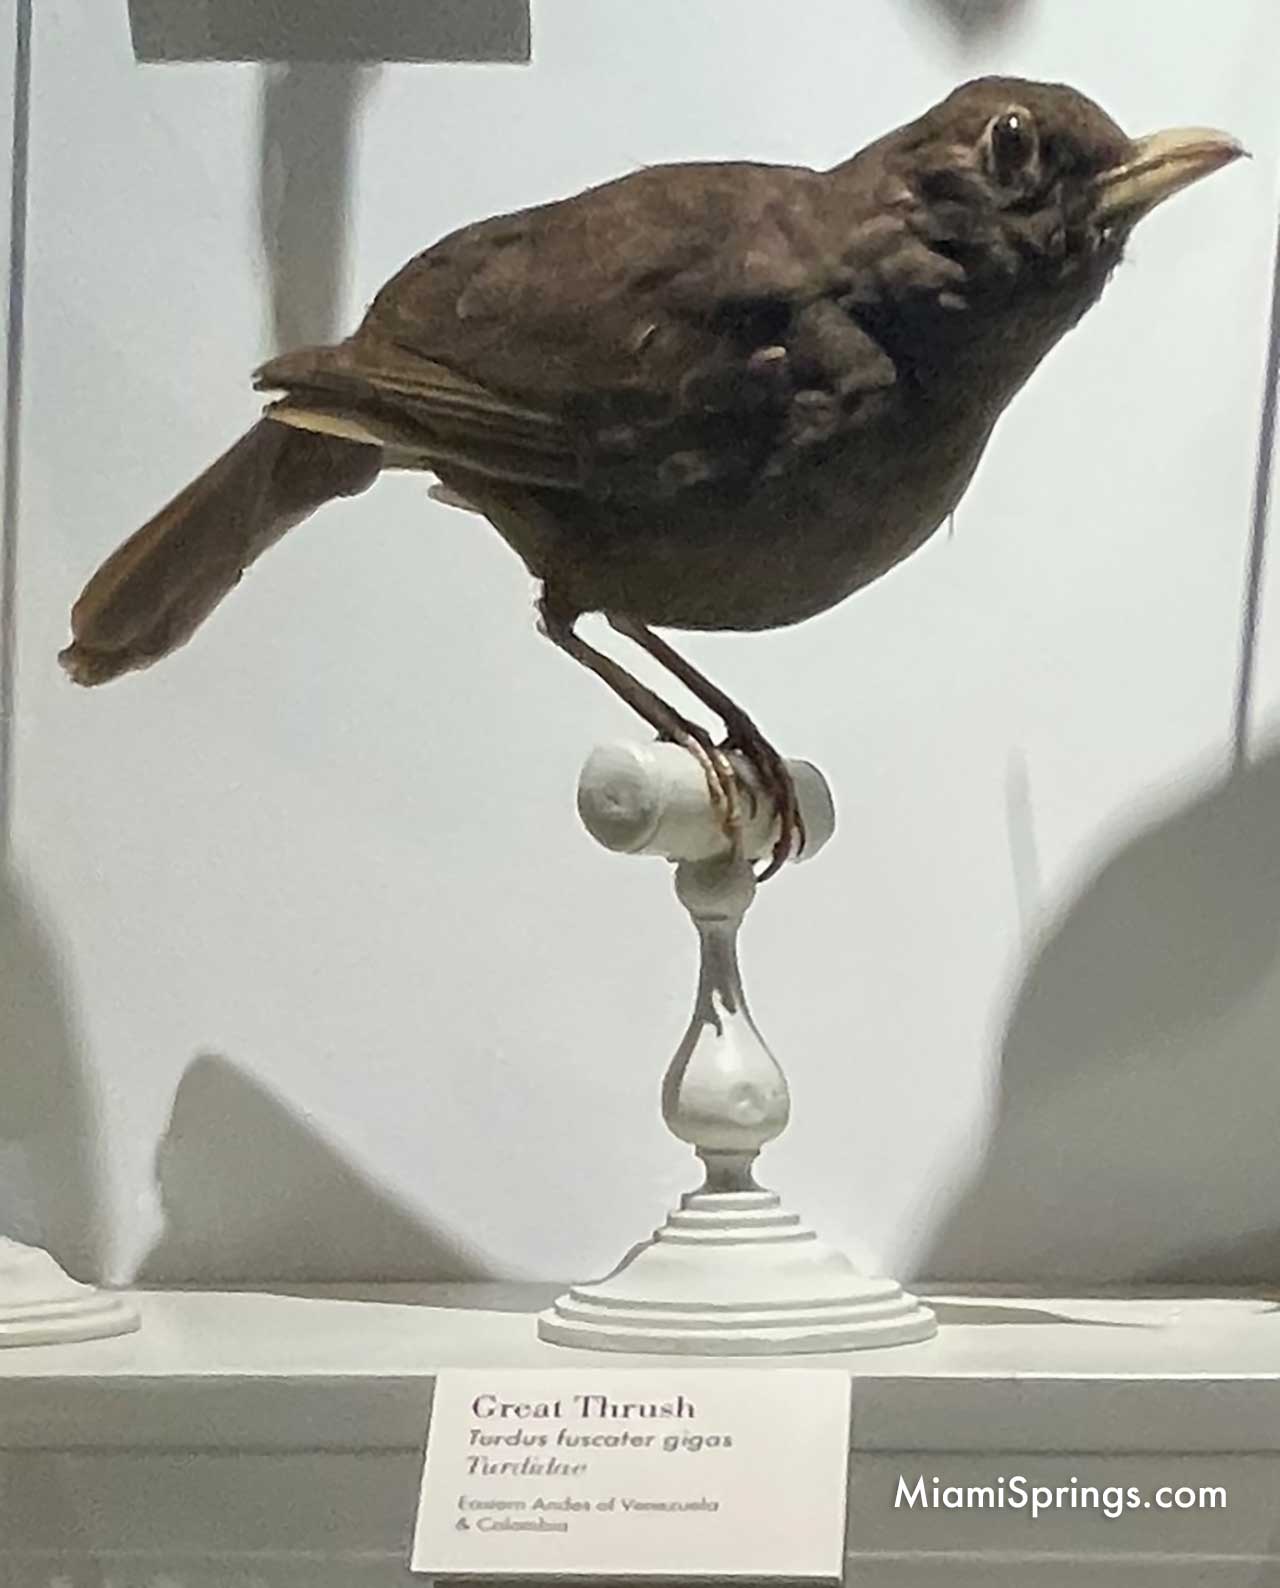 Great Thrush displayed at the Harvard Museum of Natural History